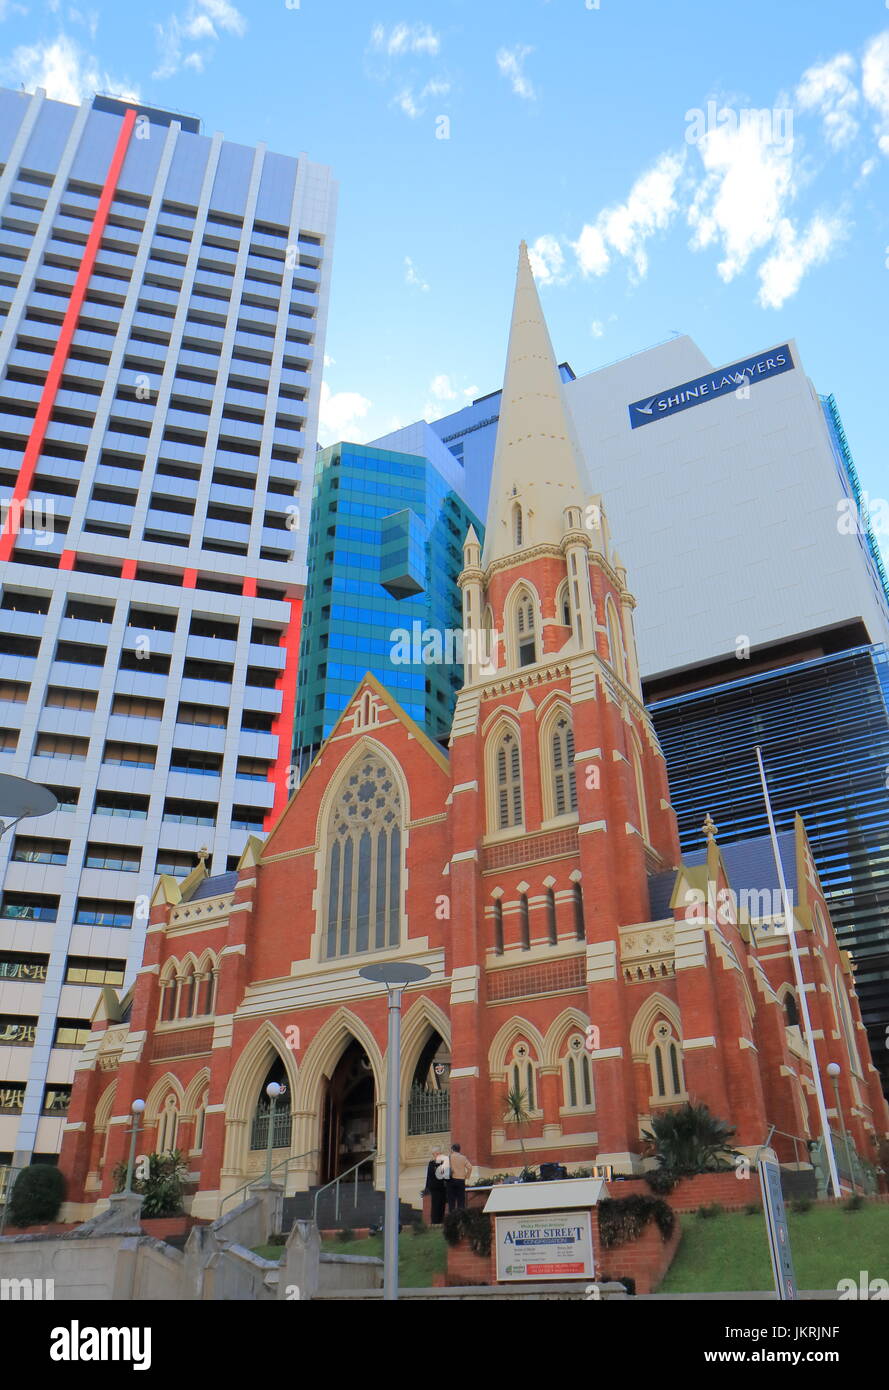 People visit Albert Street Uniting church in Brisbane Australia. Stock Photo